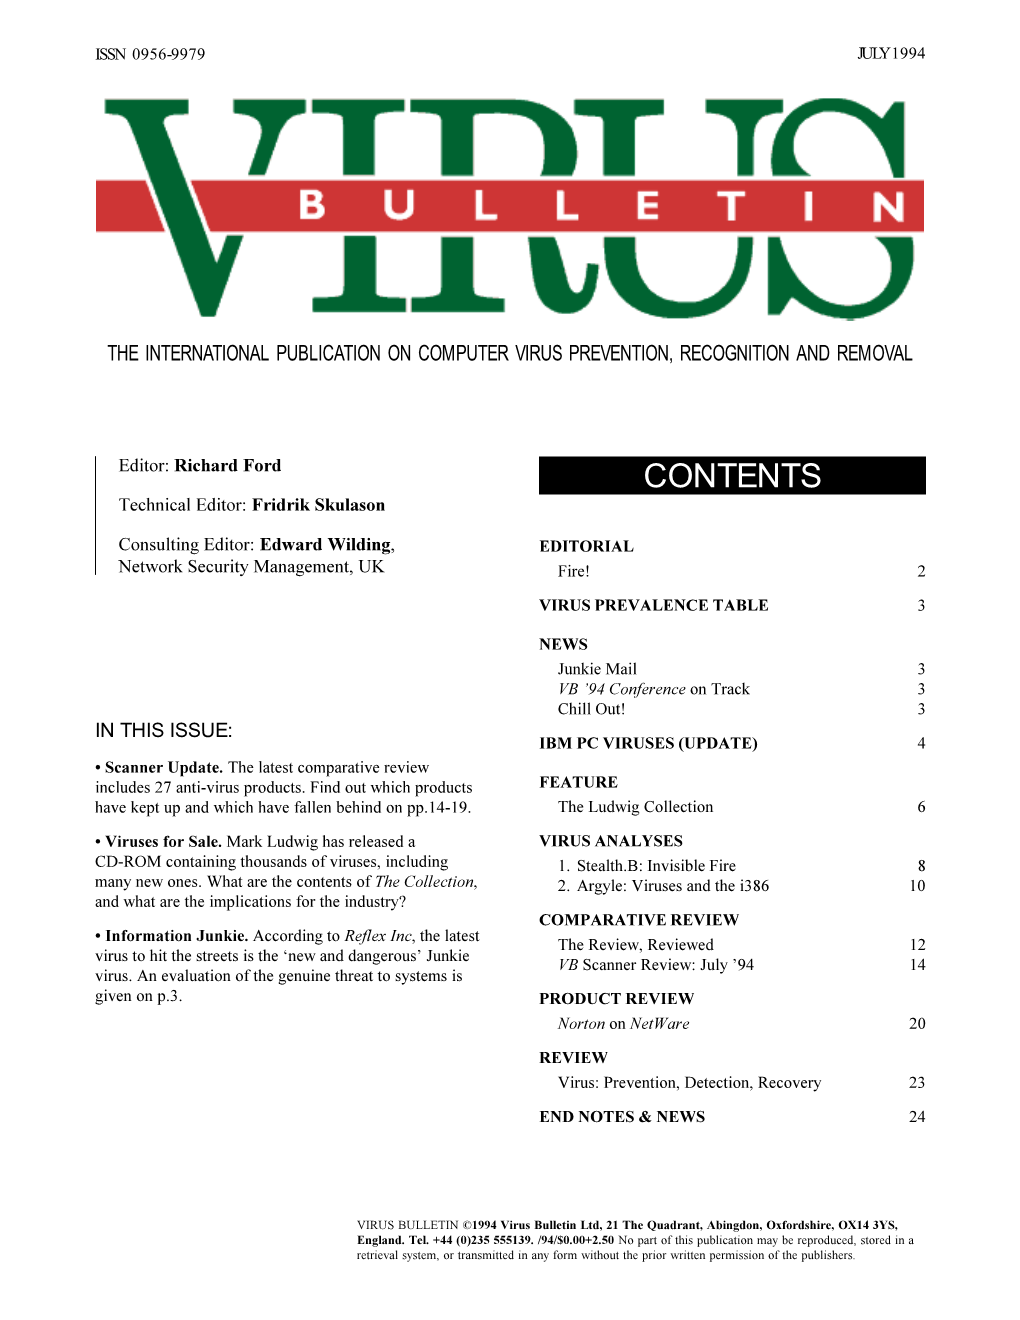 Virus Bulletin, July 1994